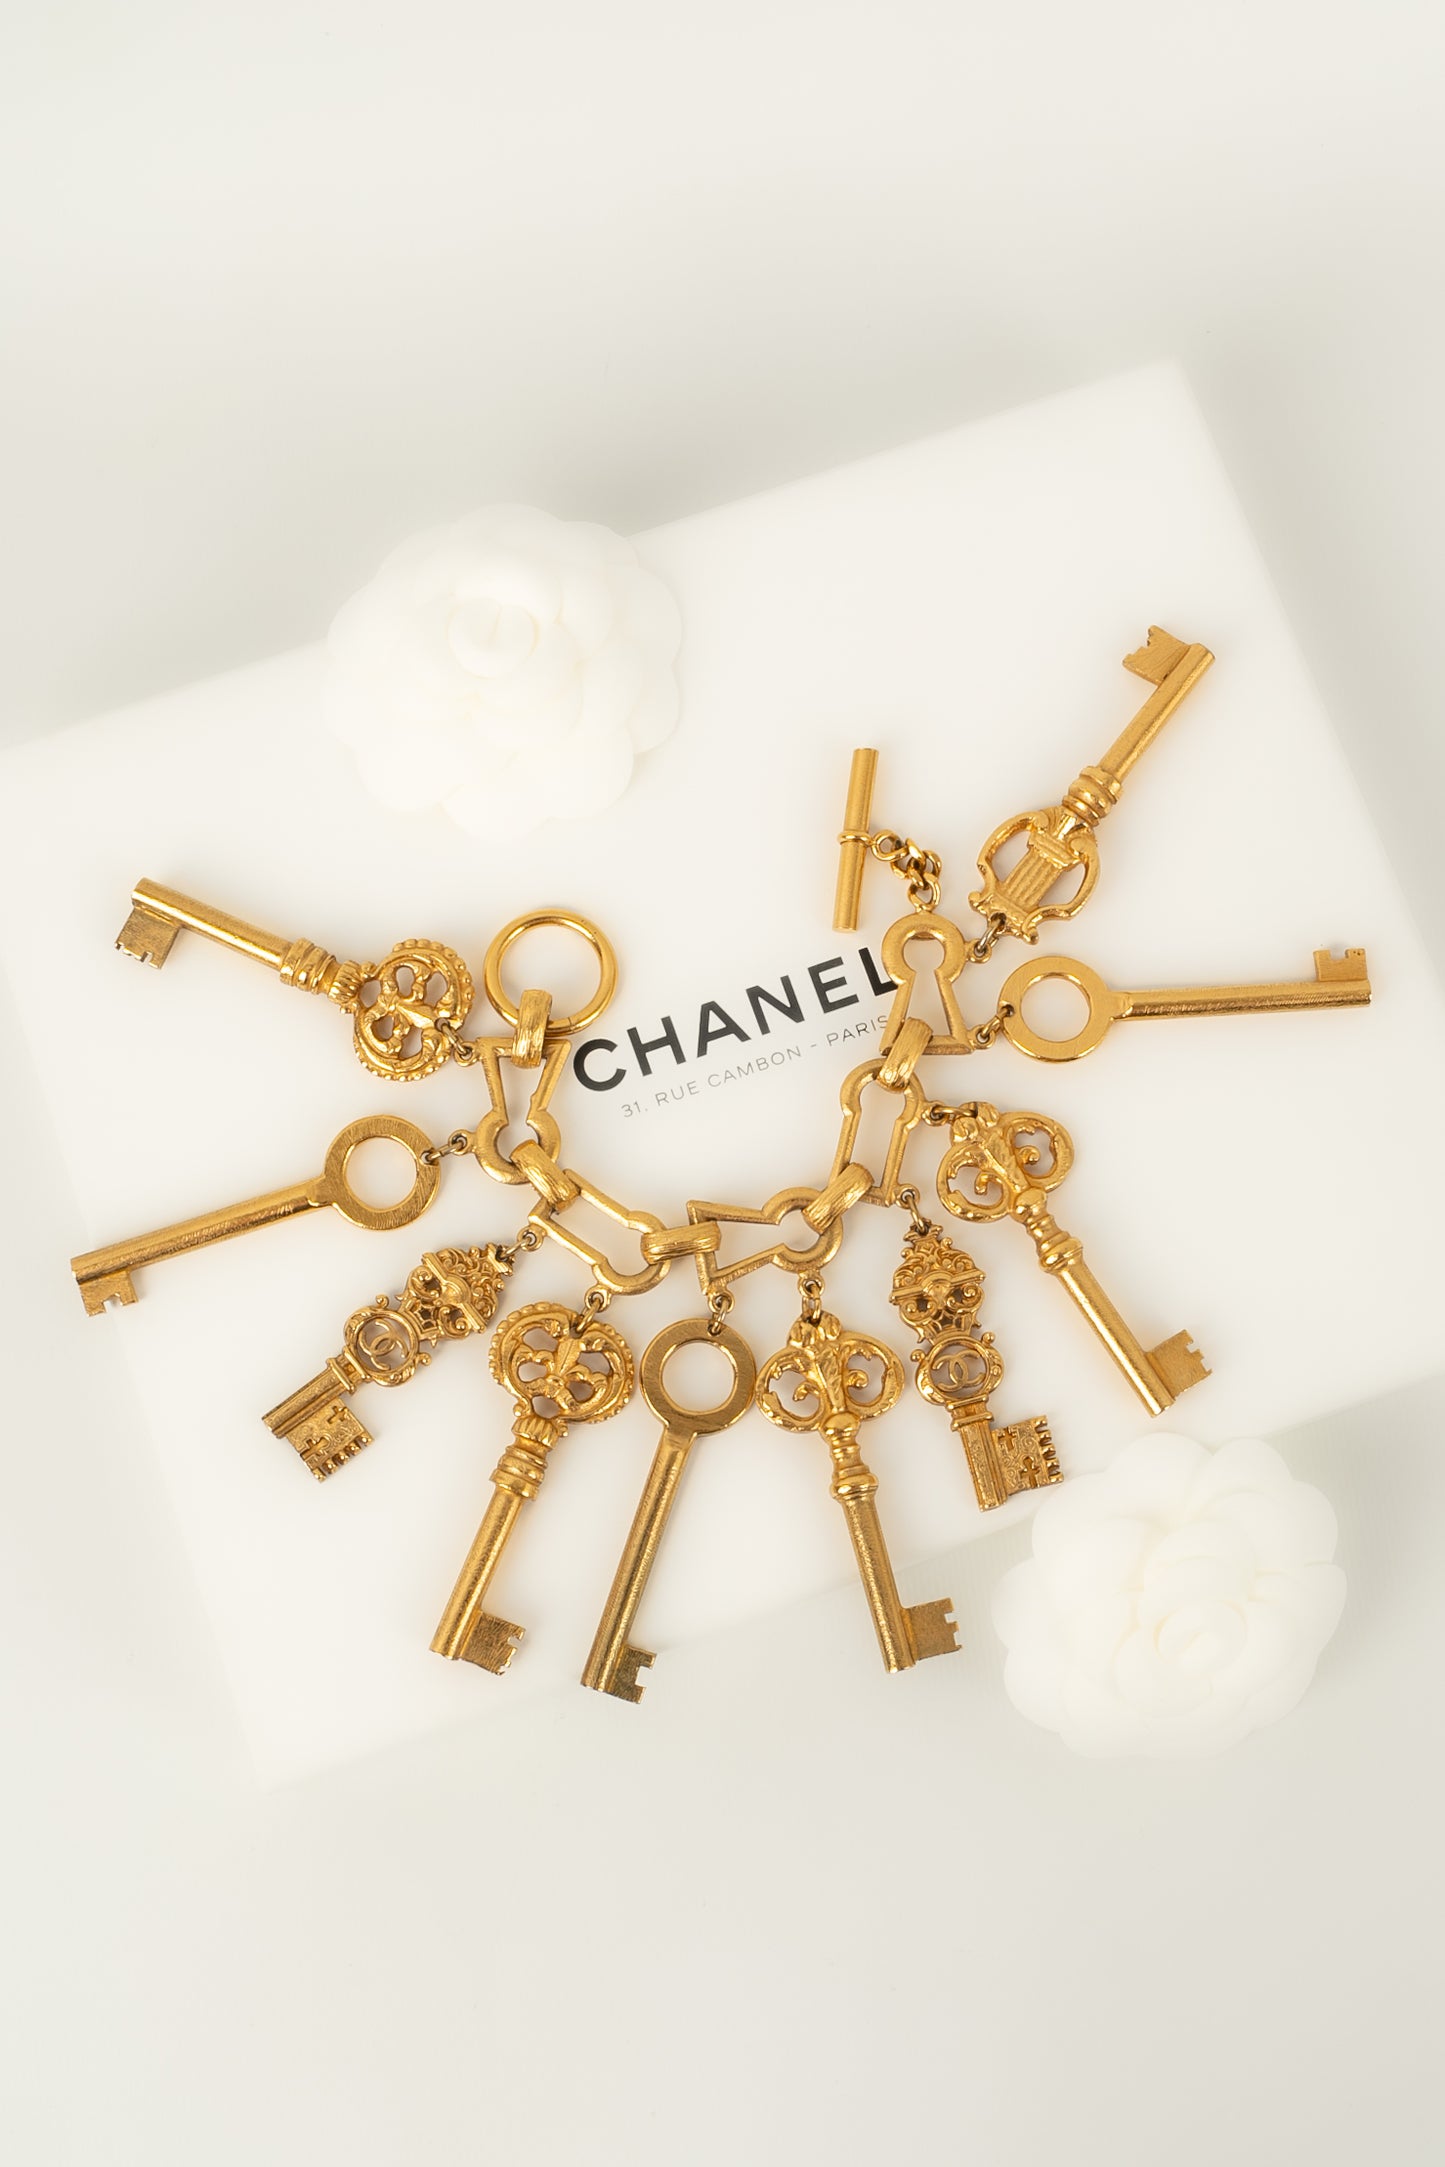 Iconic Chanel bracelet keys 1993